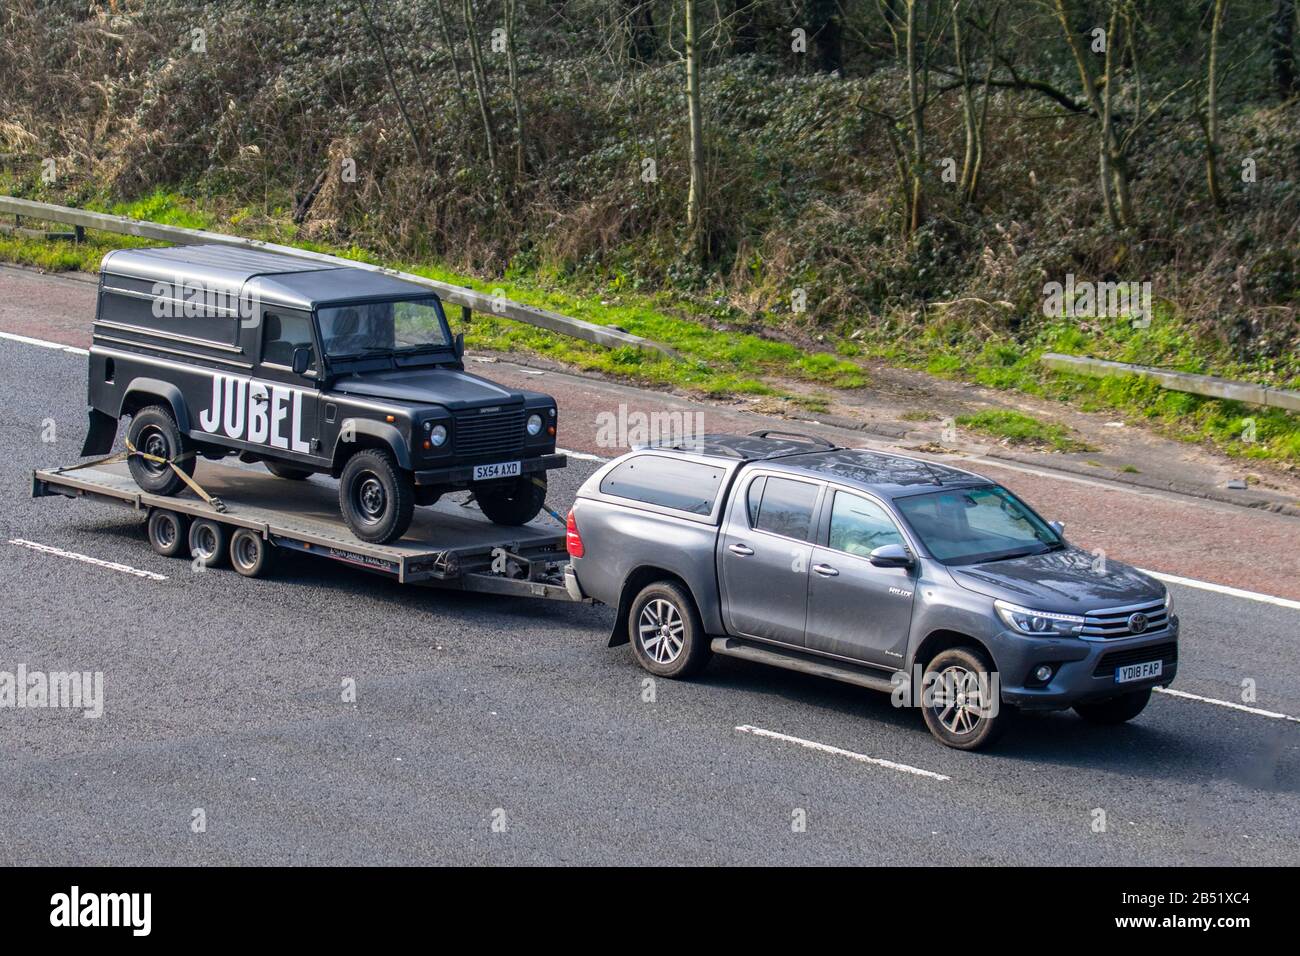 JUBEL Land Rover on trailer tow; UK vehicular traffic, transport, modern vehicles, saloon cars, vehicles, vehicle, roads, motors, motoring south-bound on the M6 motorway highway Stock Photo